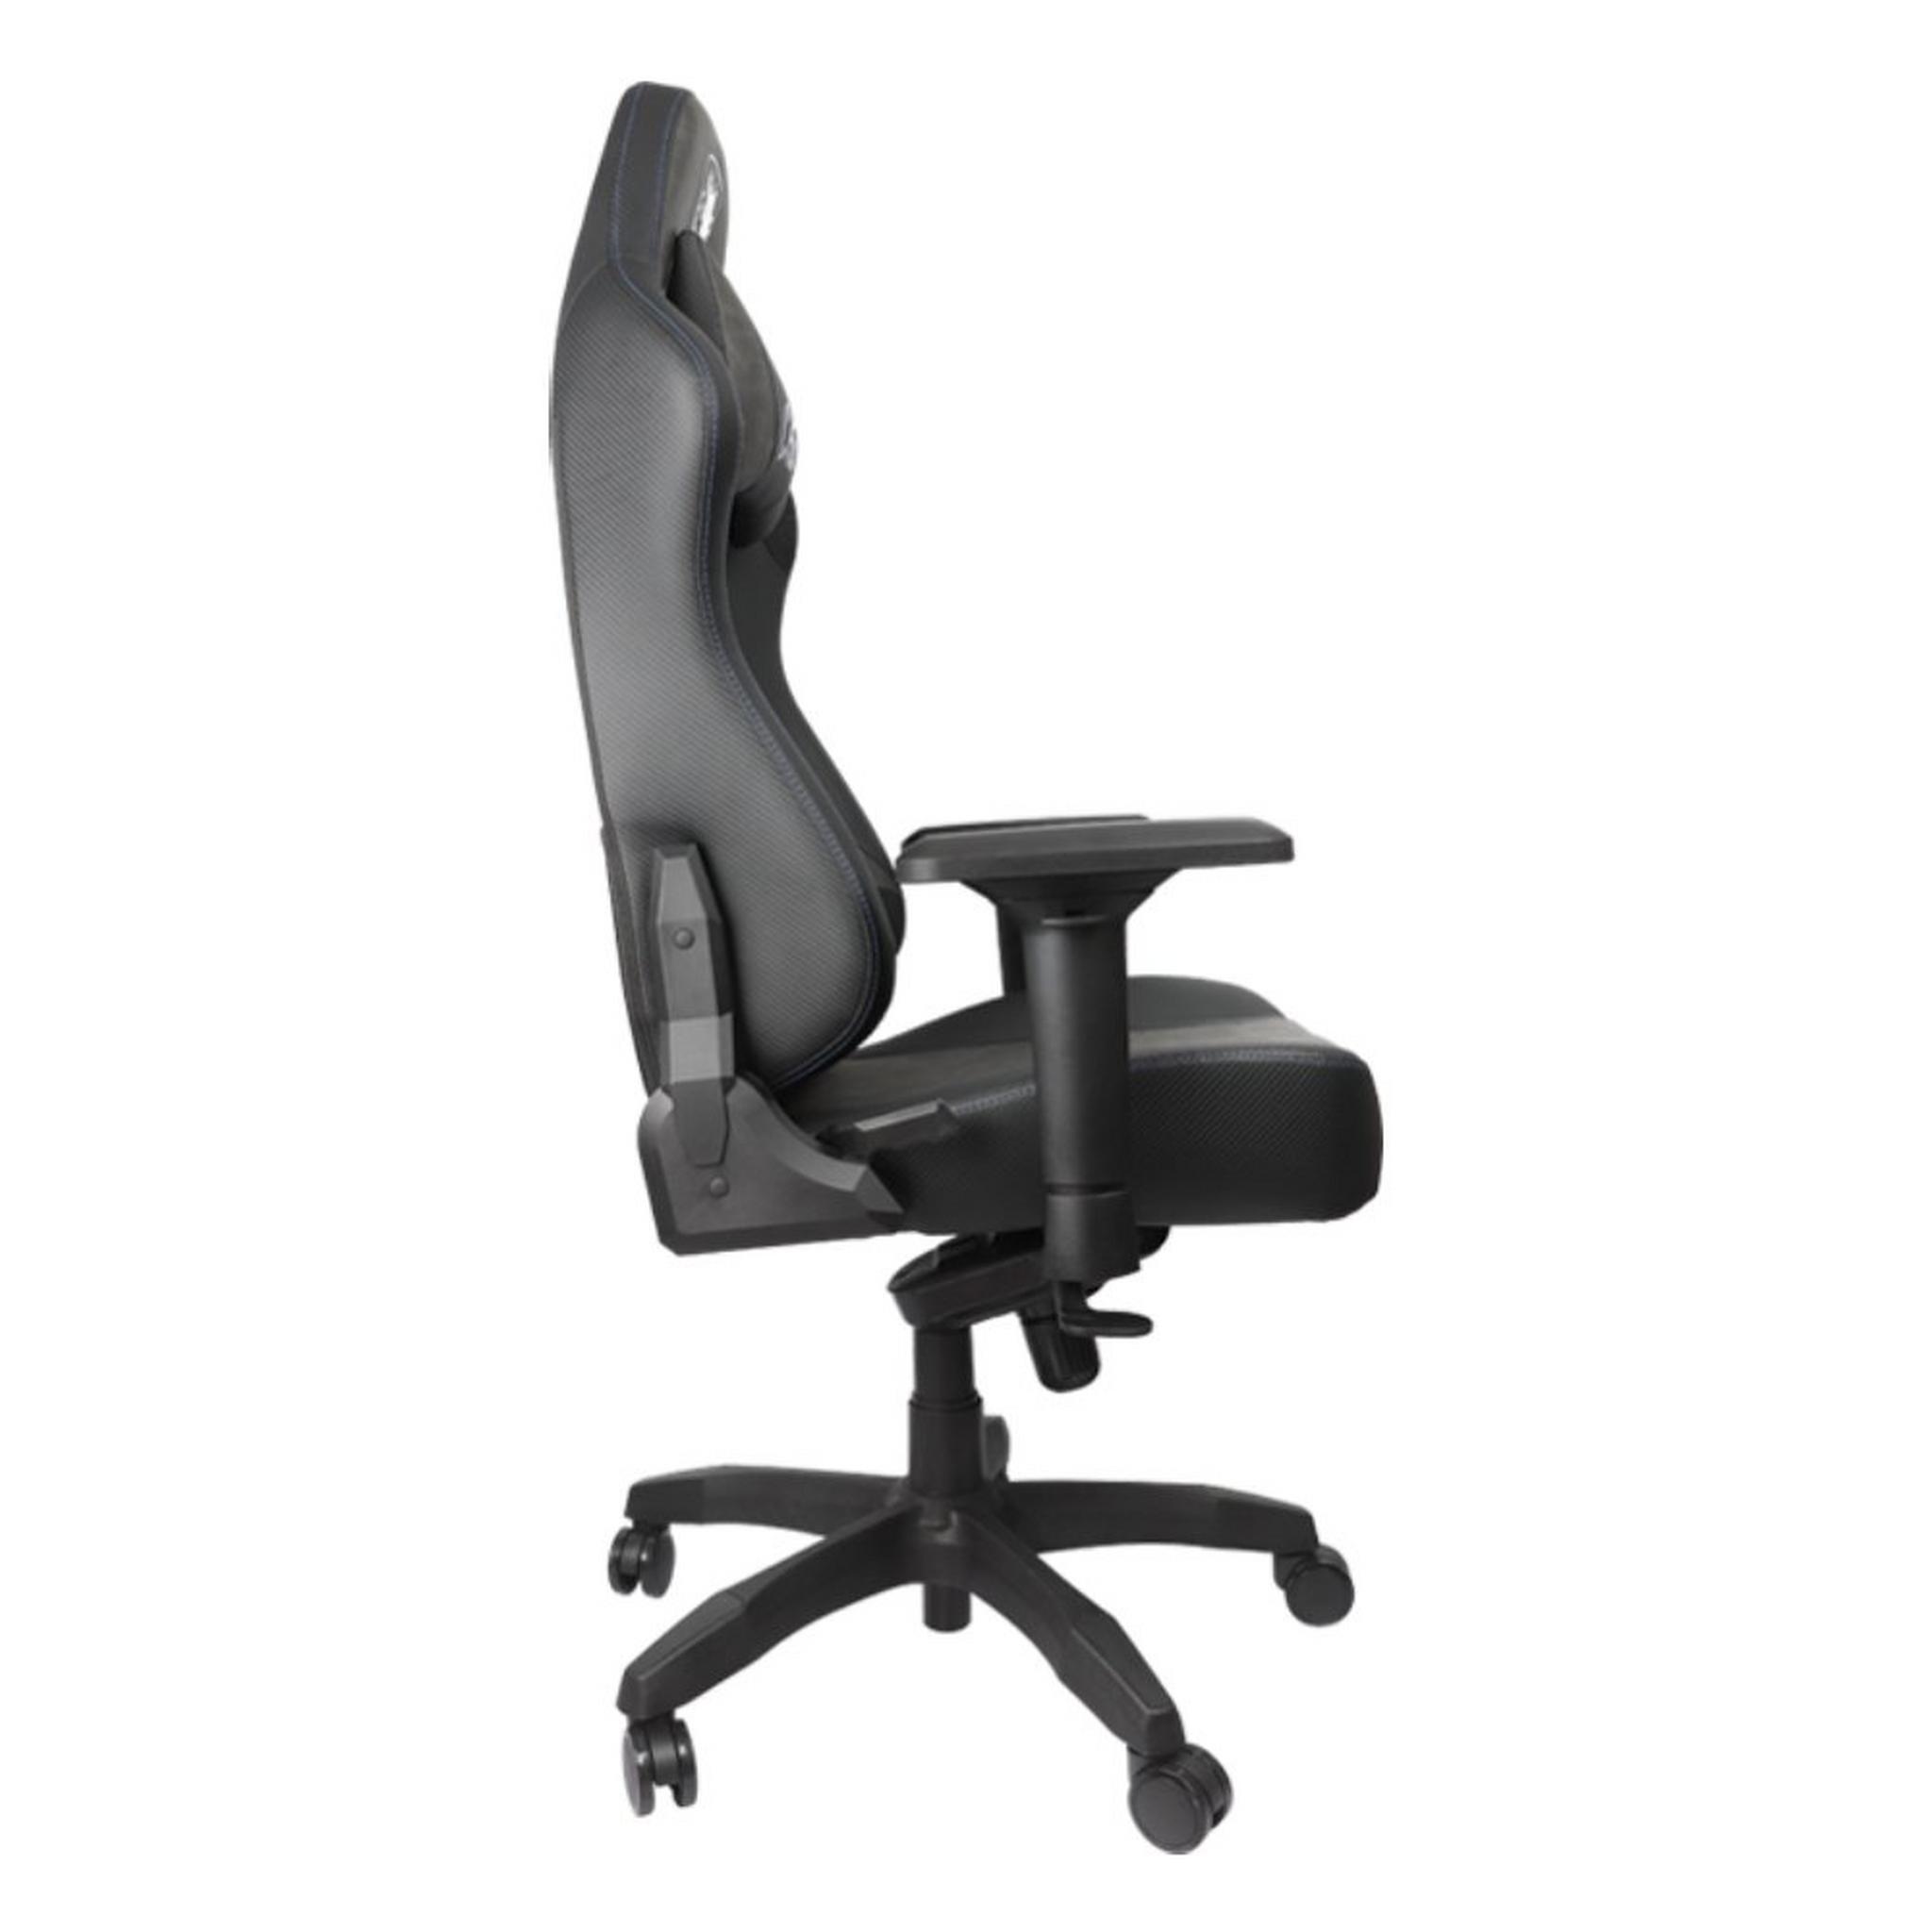 Sades Cetus AD9 Gaming Chair  - Black